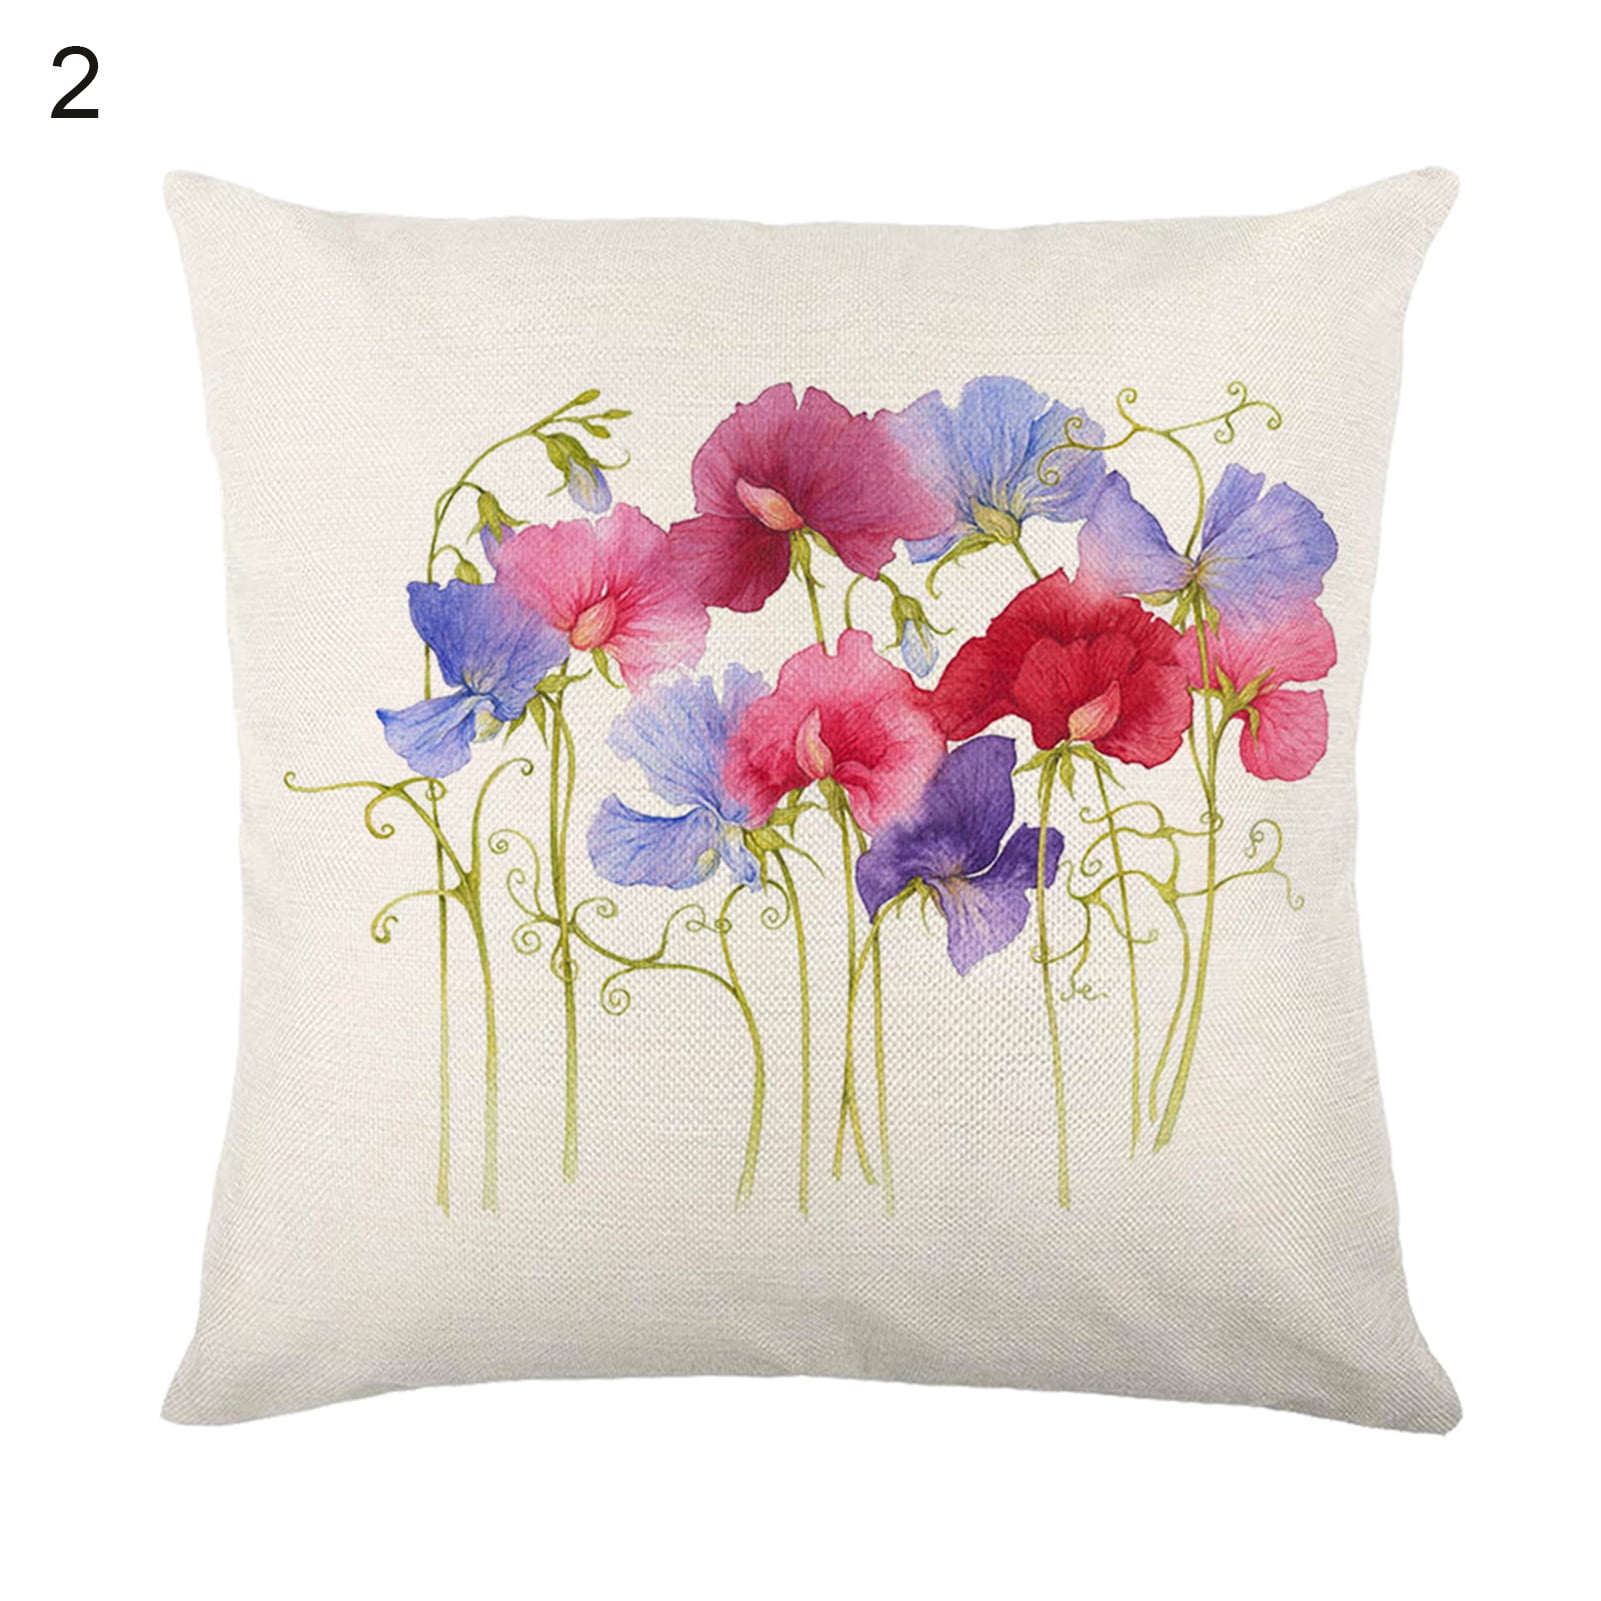 Digital Print Cushion covers beautiful flower print cushion cover 